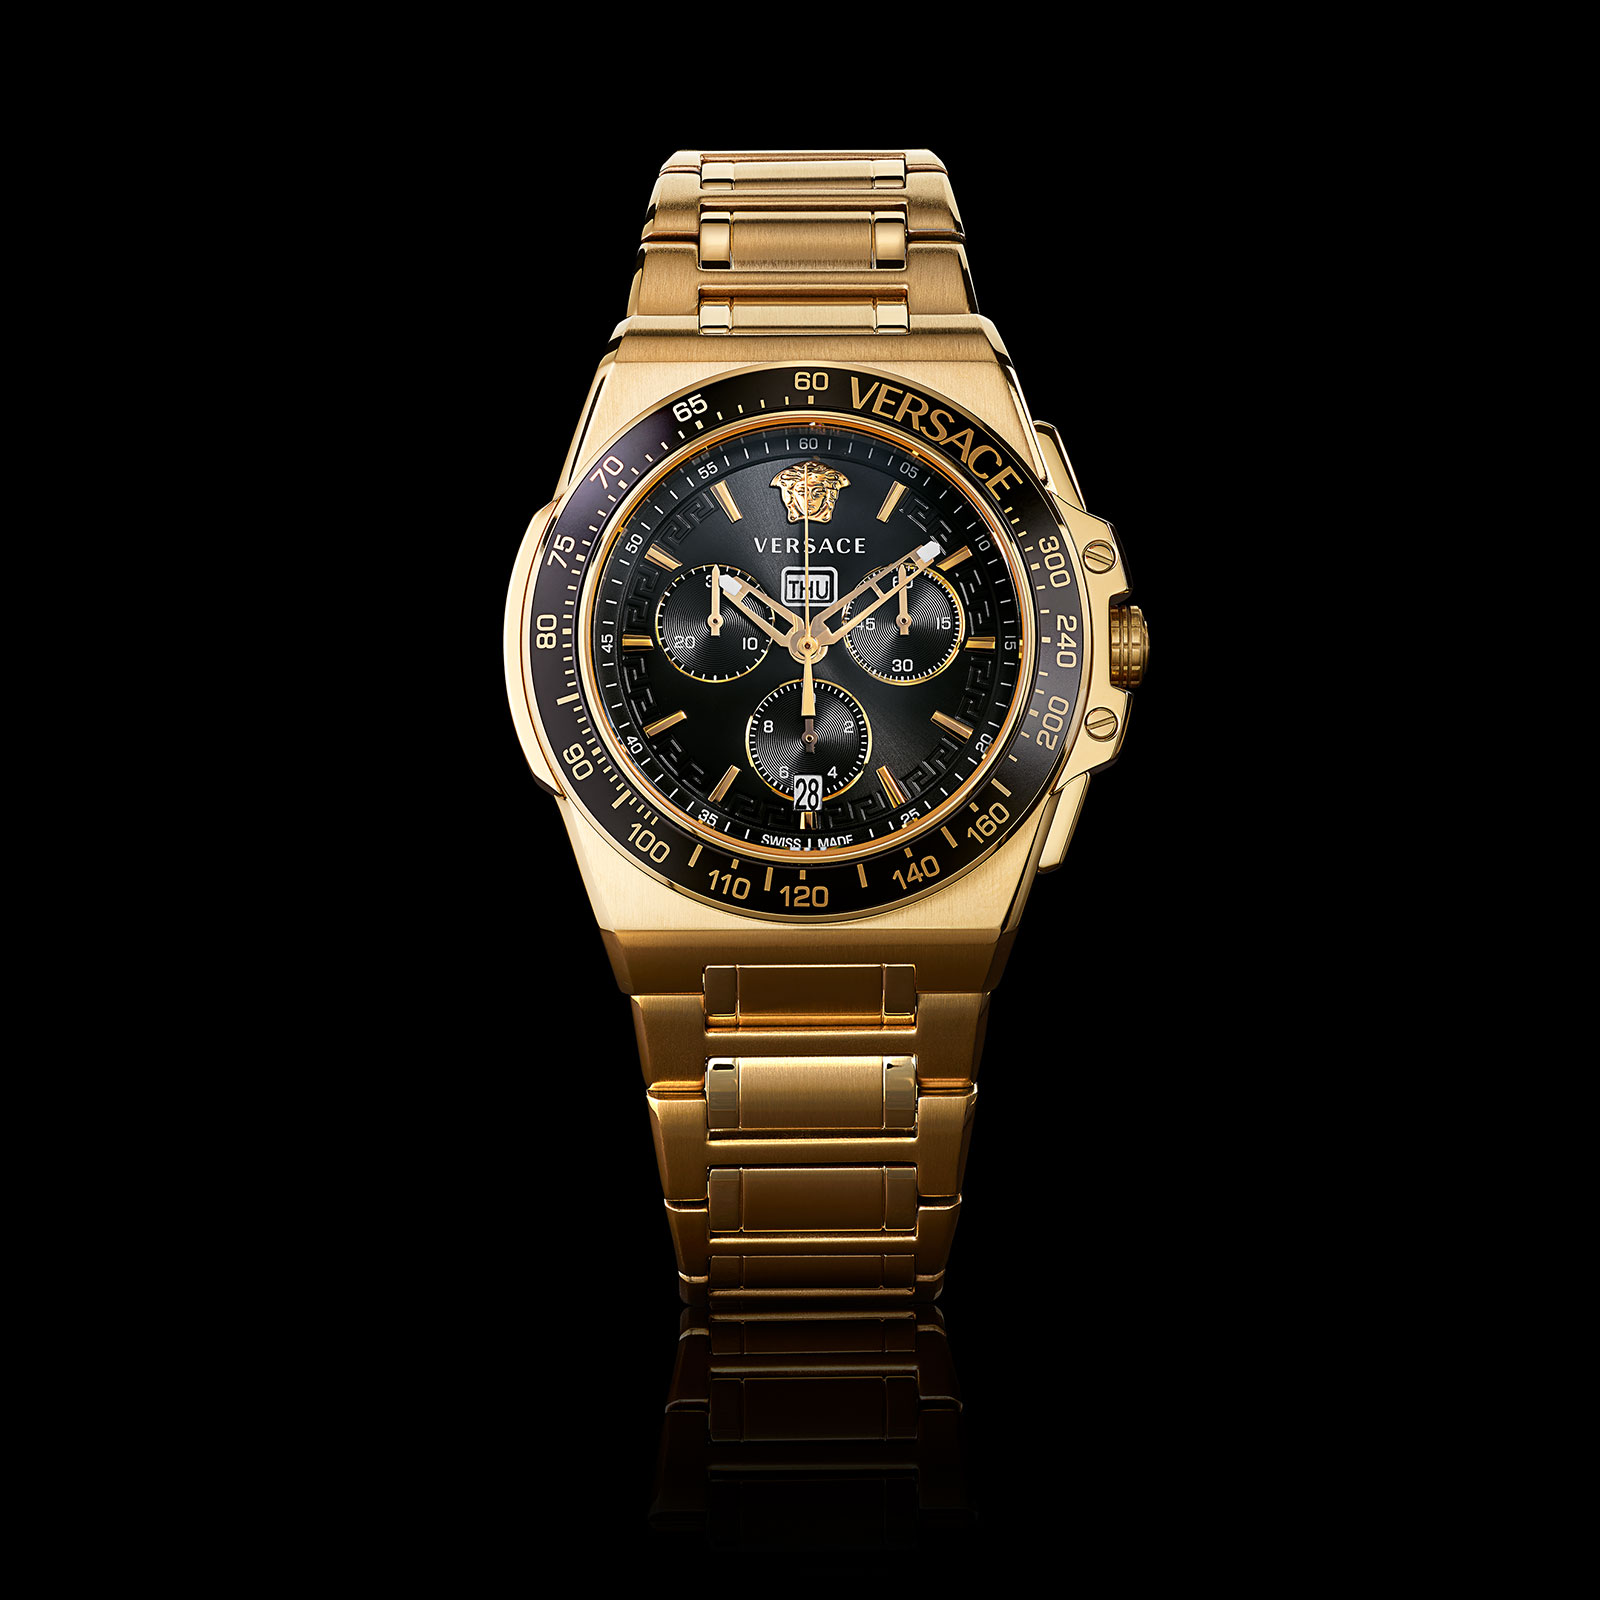 FORZA STYLE掲載｜NEWS｜VERSACE WATCHES ヴェルサーチェJAPAN公式サイト - ヴェルサーチェ・イタリア発の高級腕時計